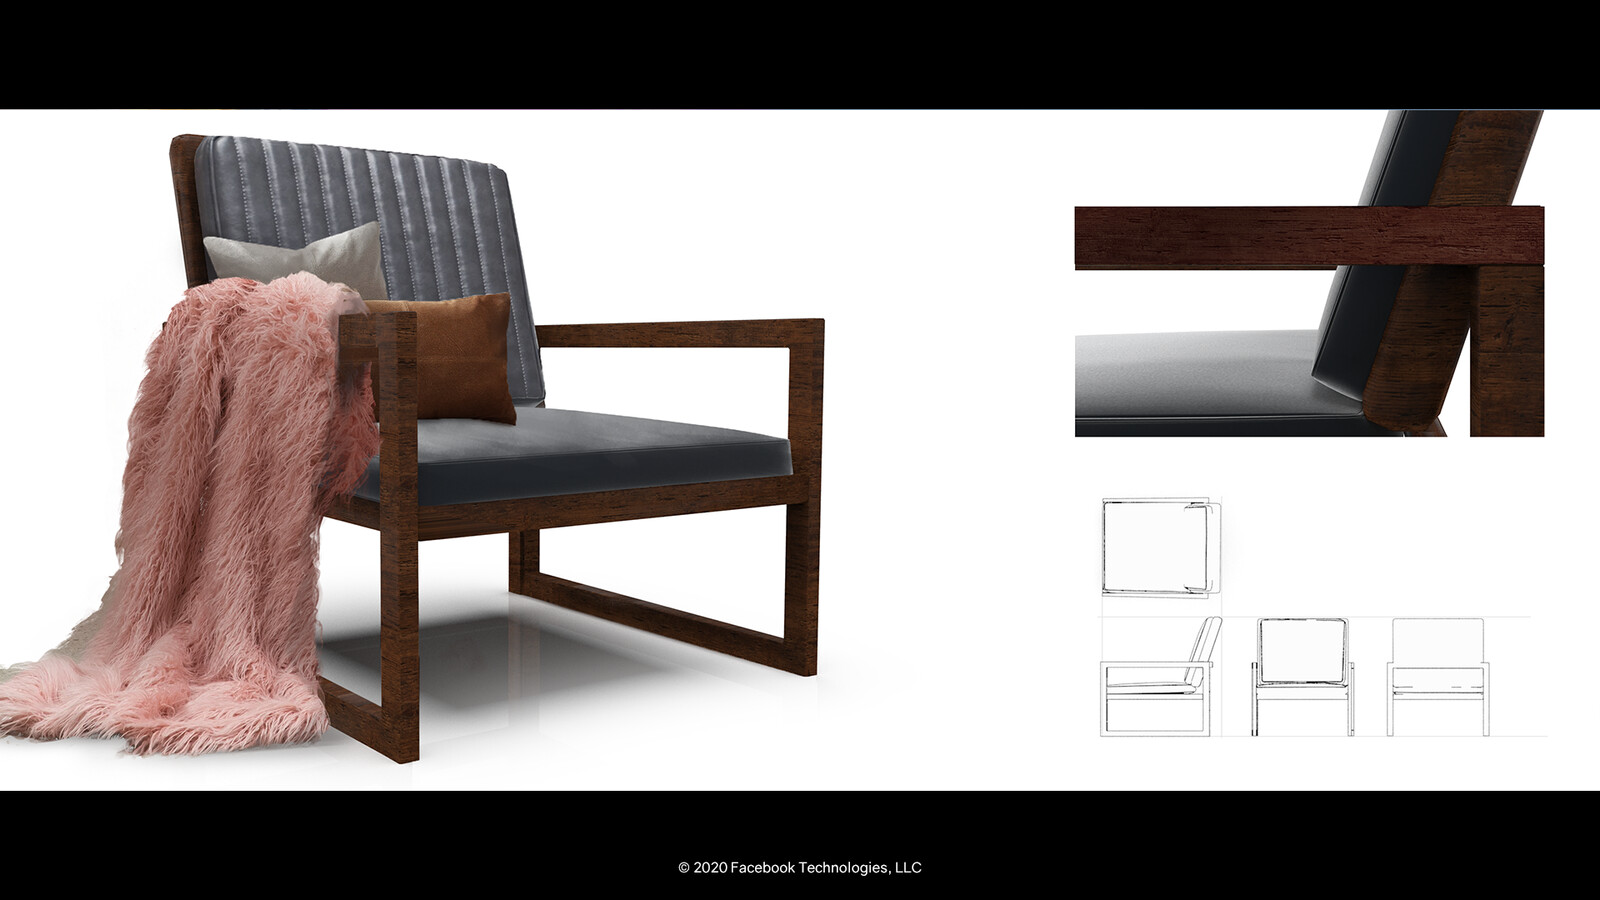 Furniture concepts